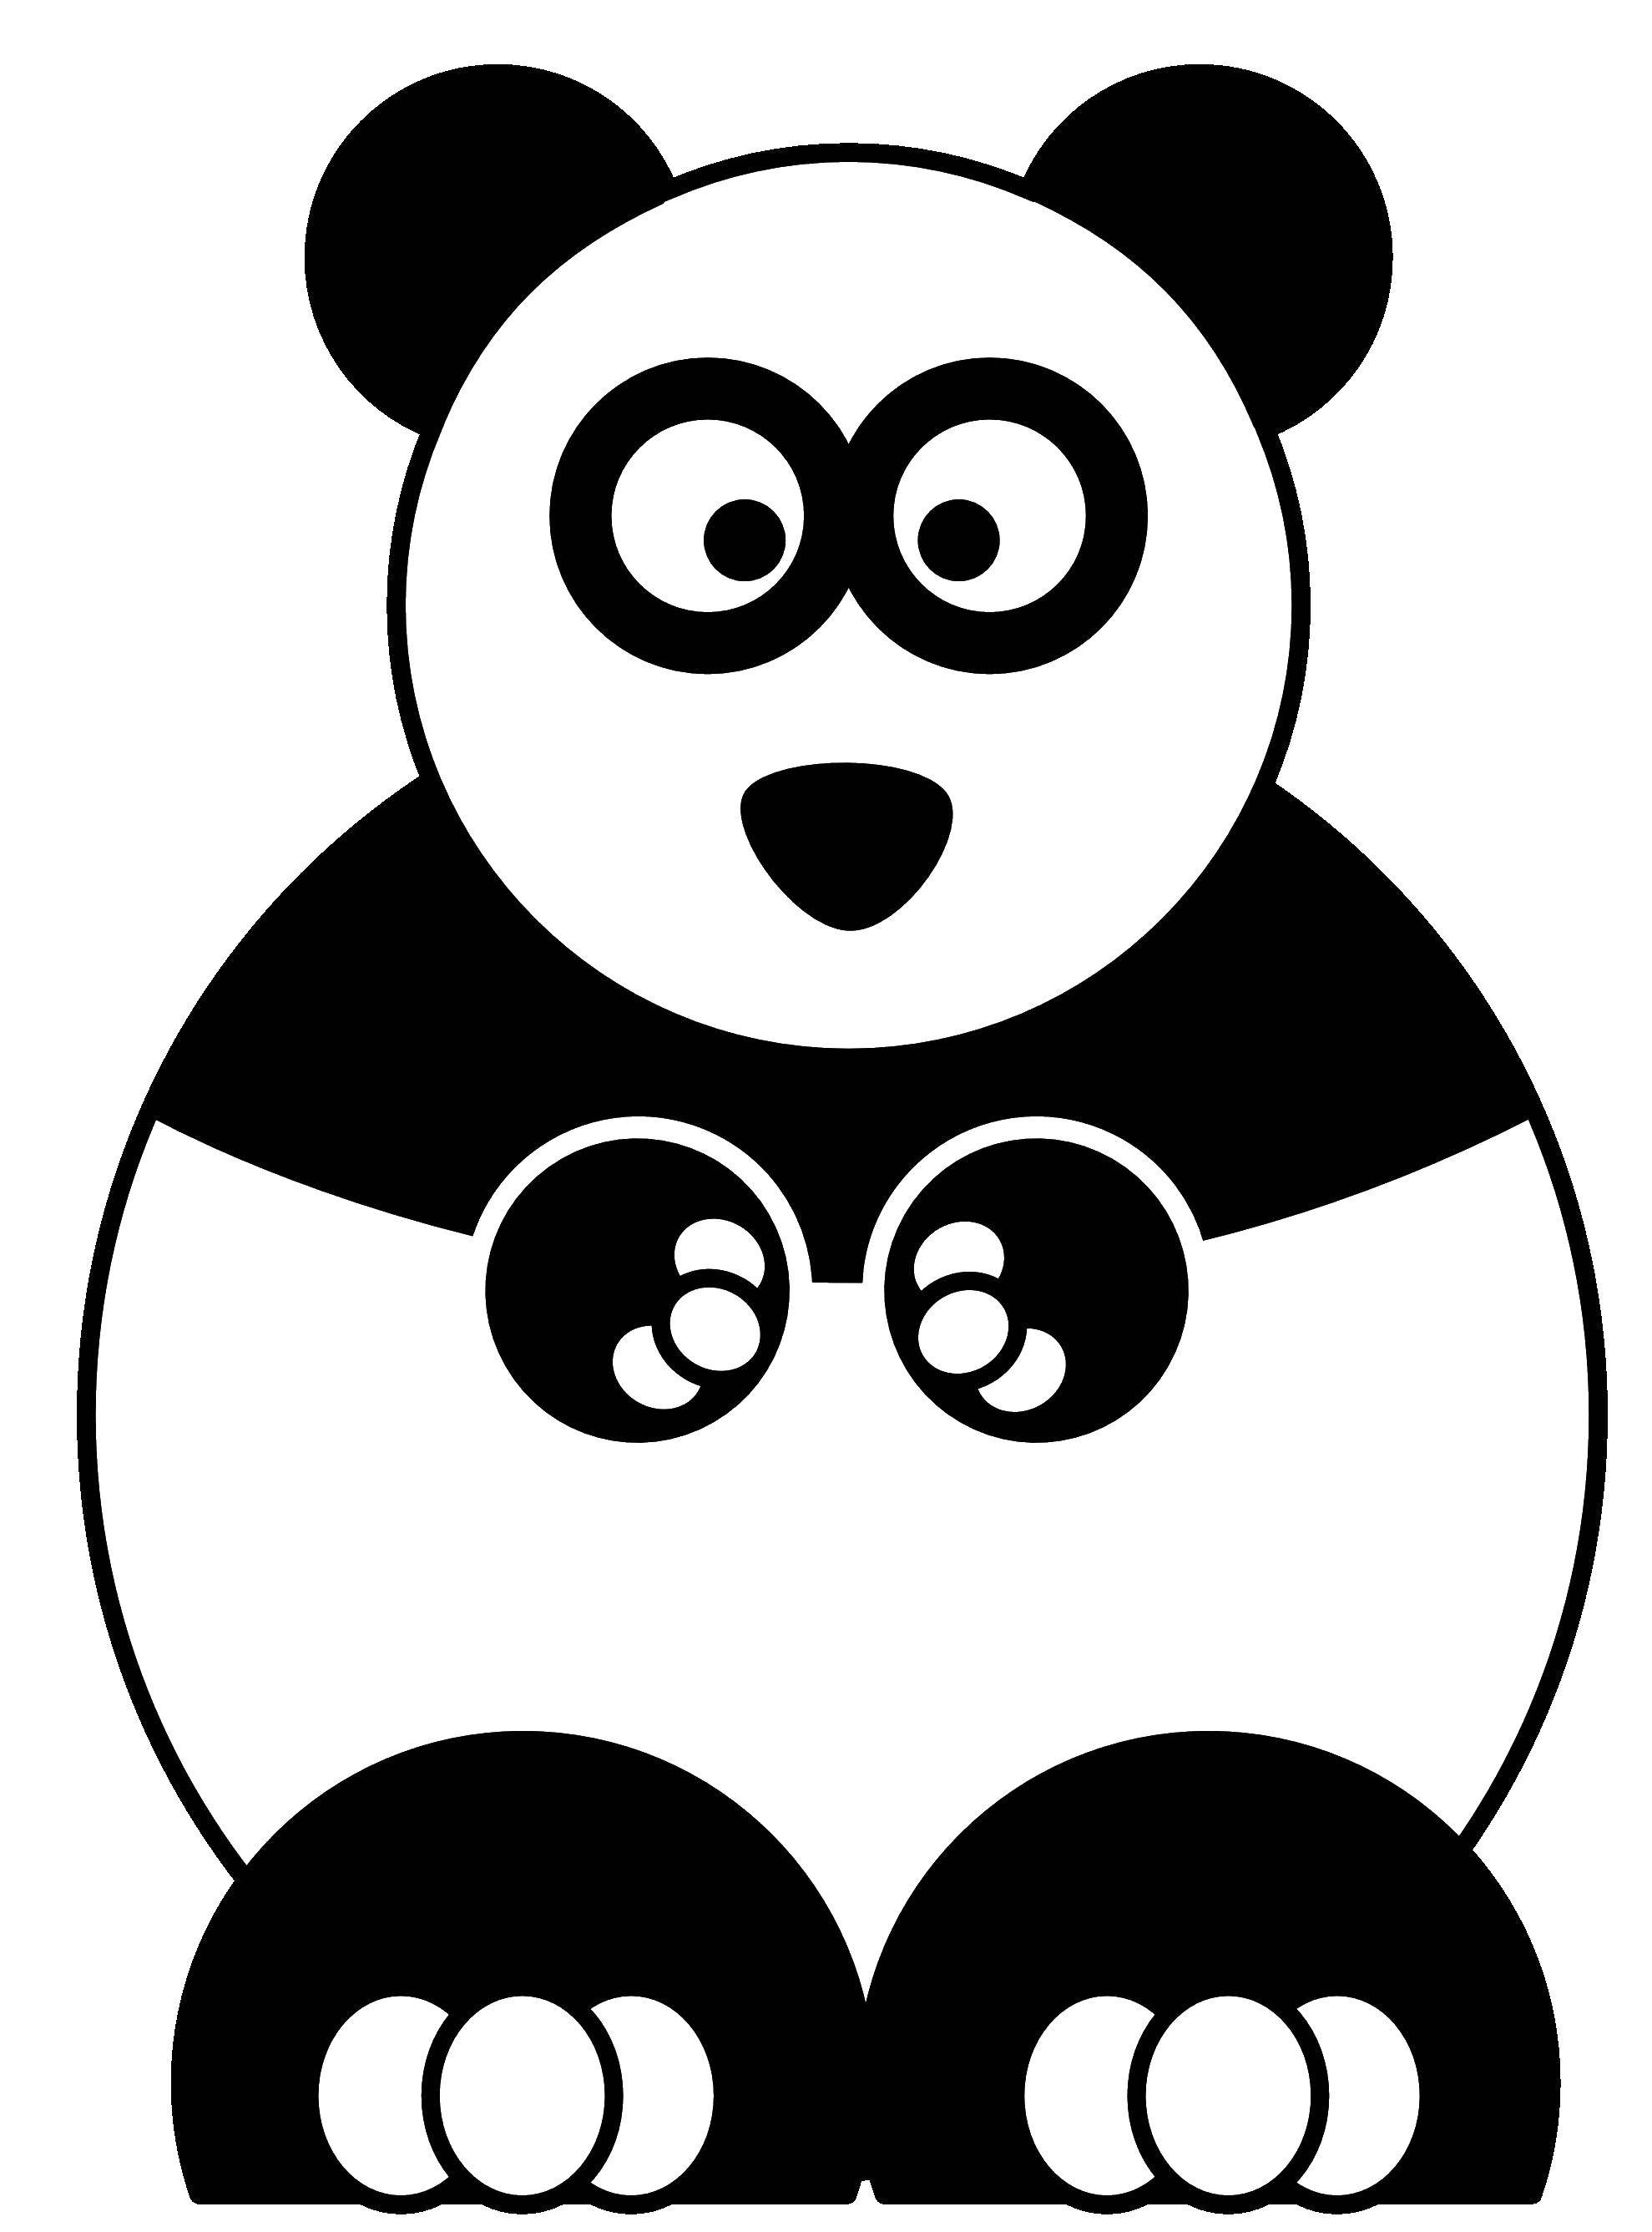 Coloring Panda. Category Kirby. Tags:  Kirby, Panda.